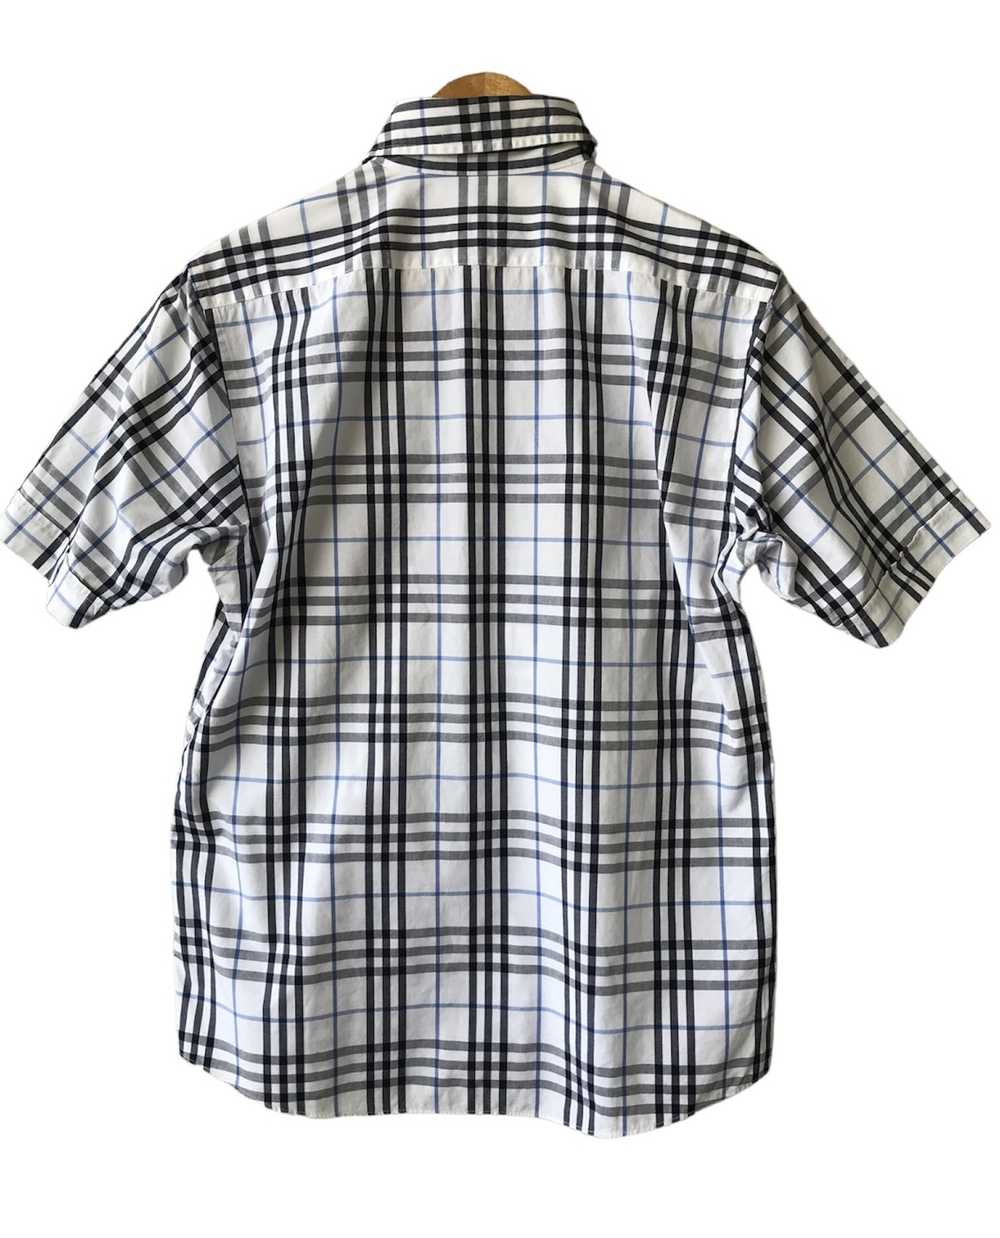 Burberry Burberry Black Label Checkered shirt - image 2